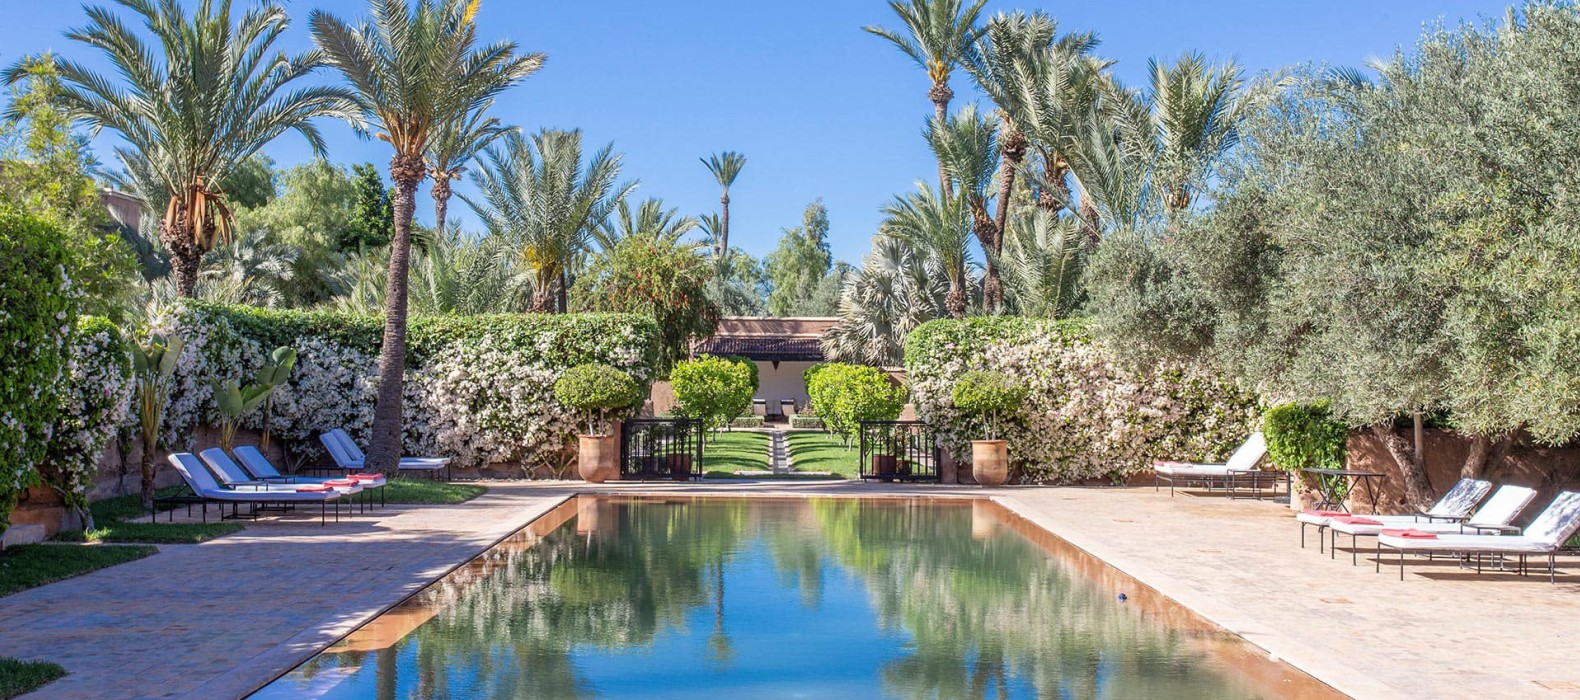 Exterior pool view of Villa Gardien du Ciel in Marrakech